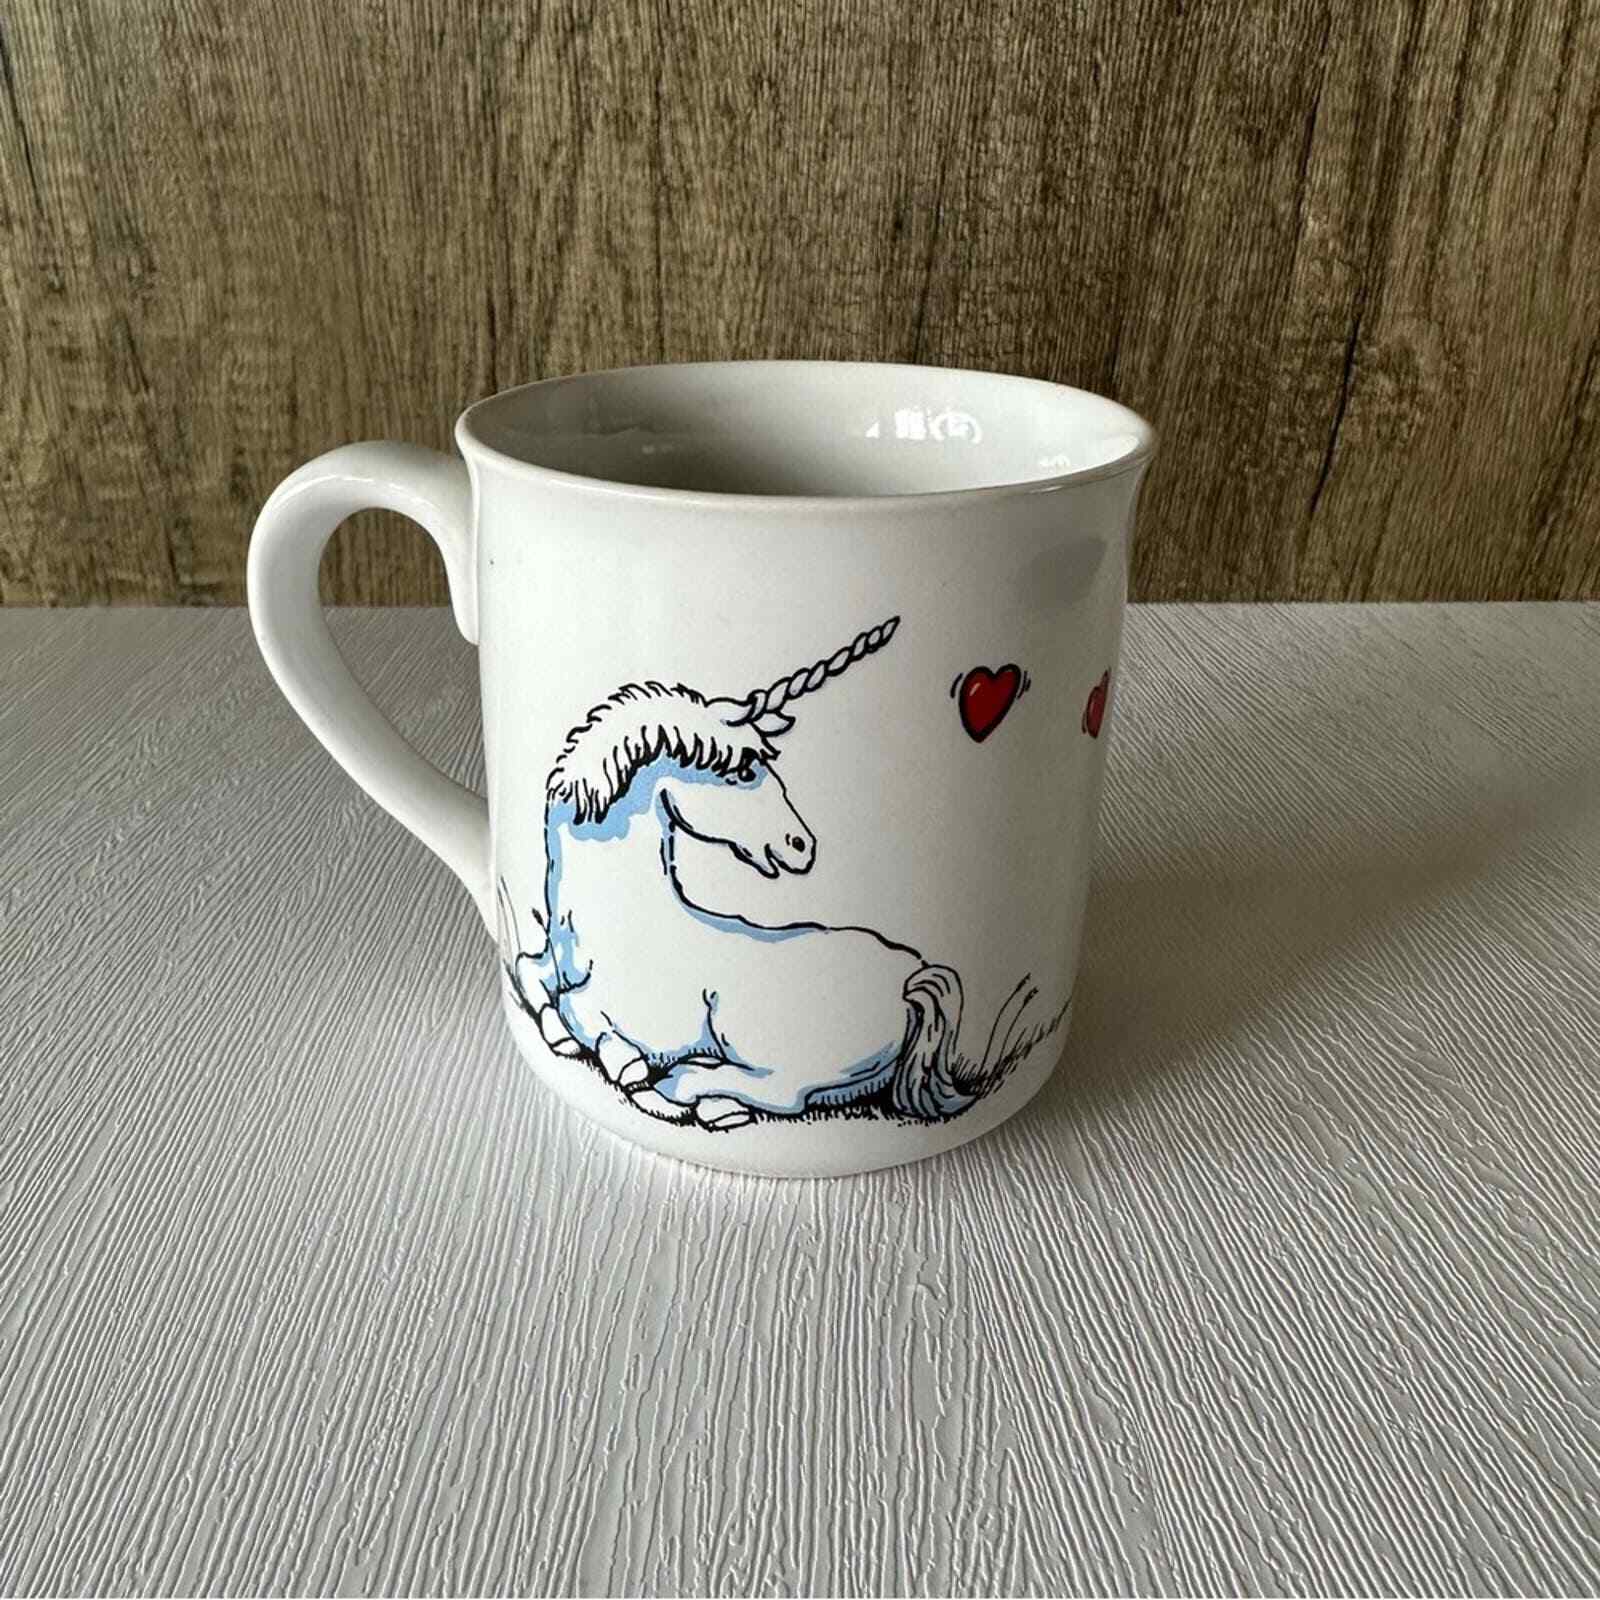 Russ Berrie Vintage Mug Unicorns Hearts Collectible 1980s